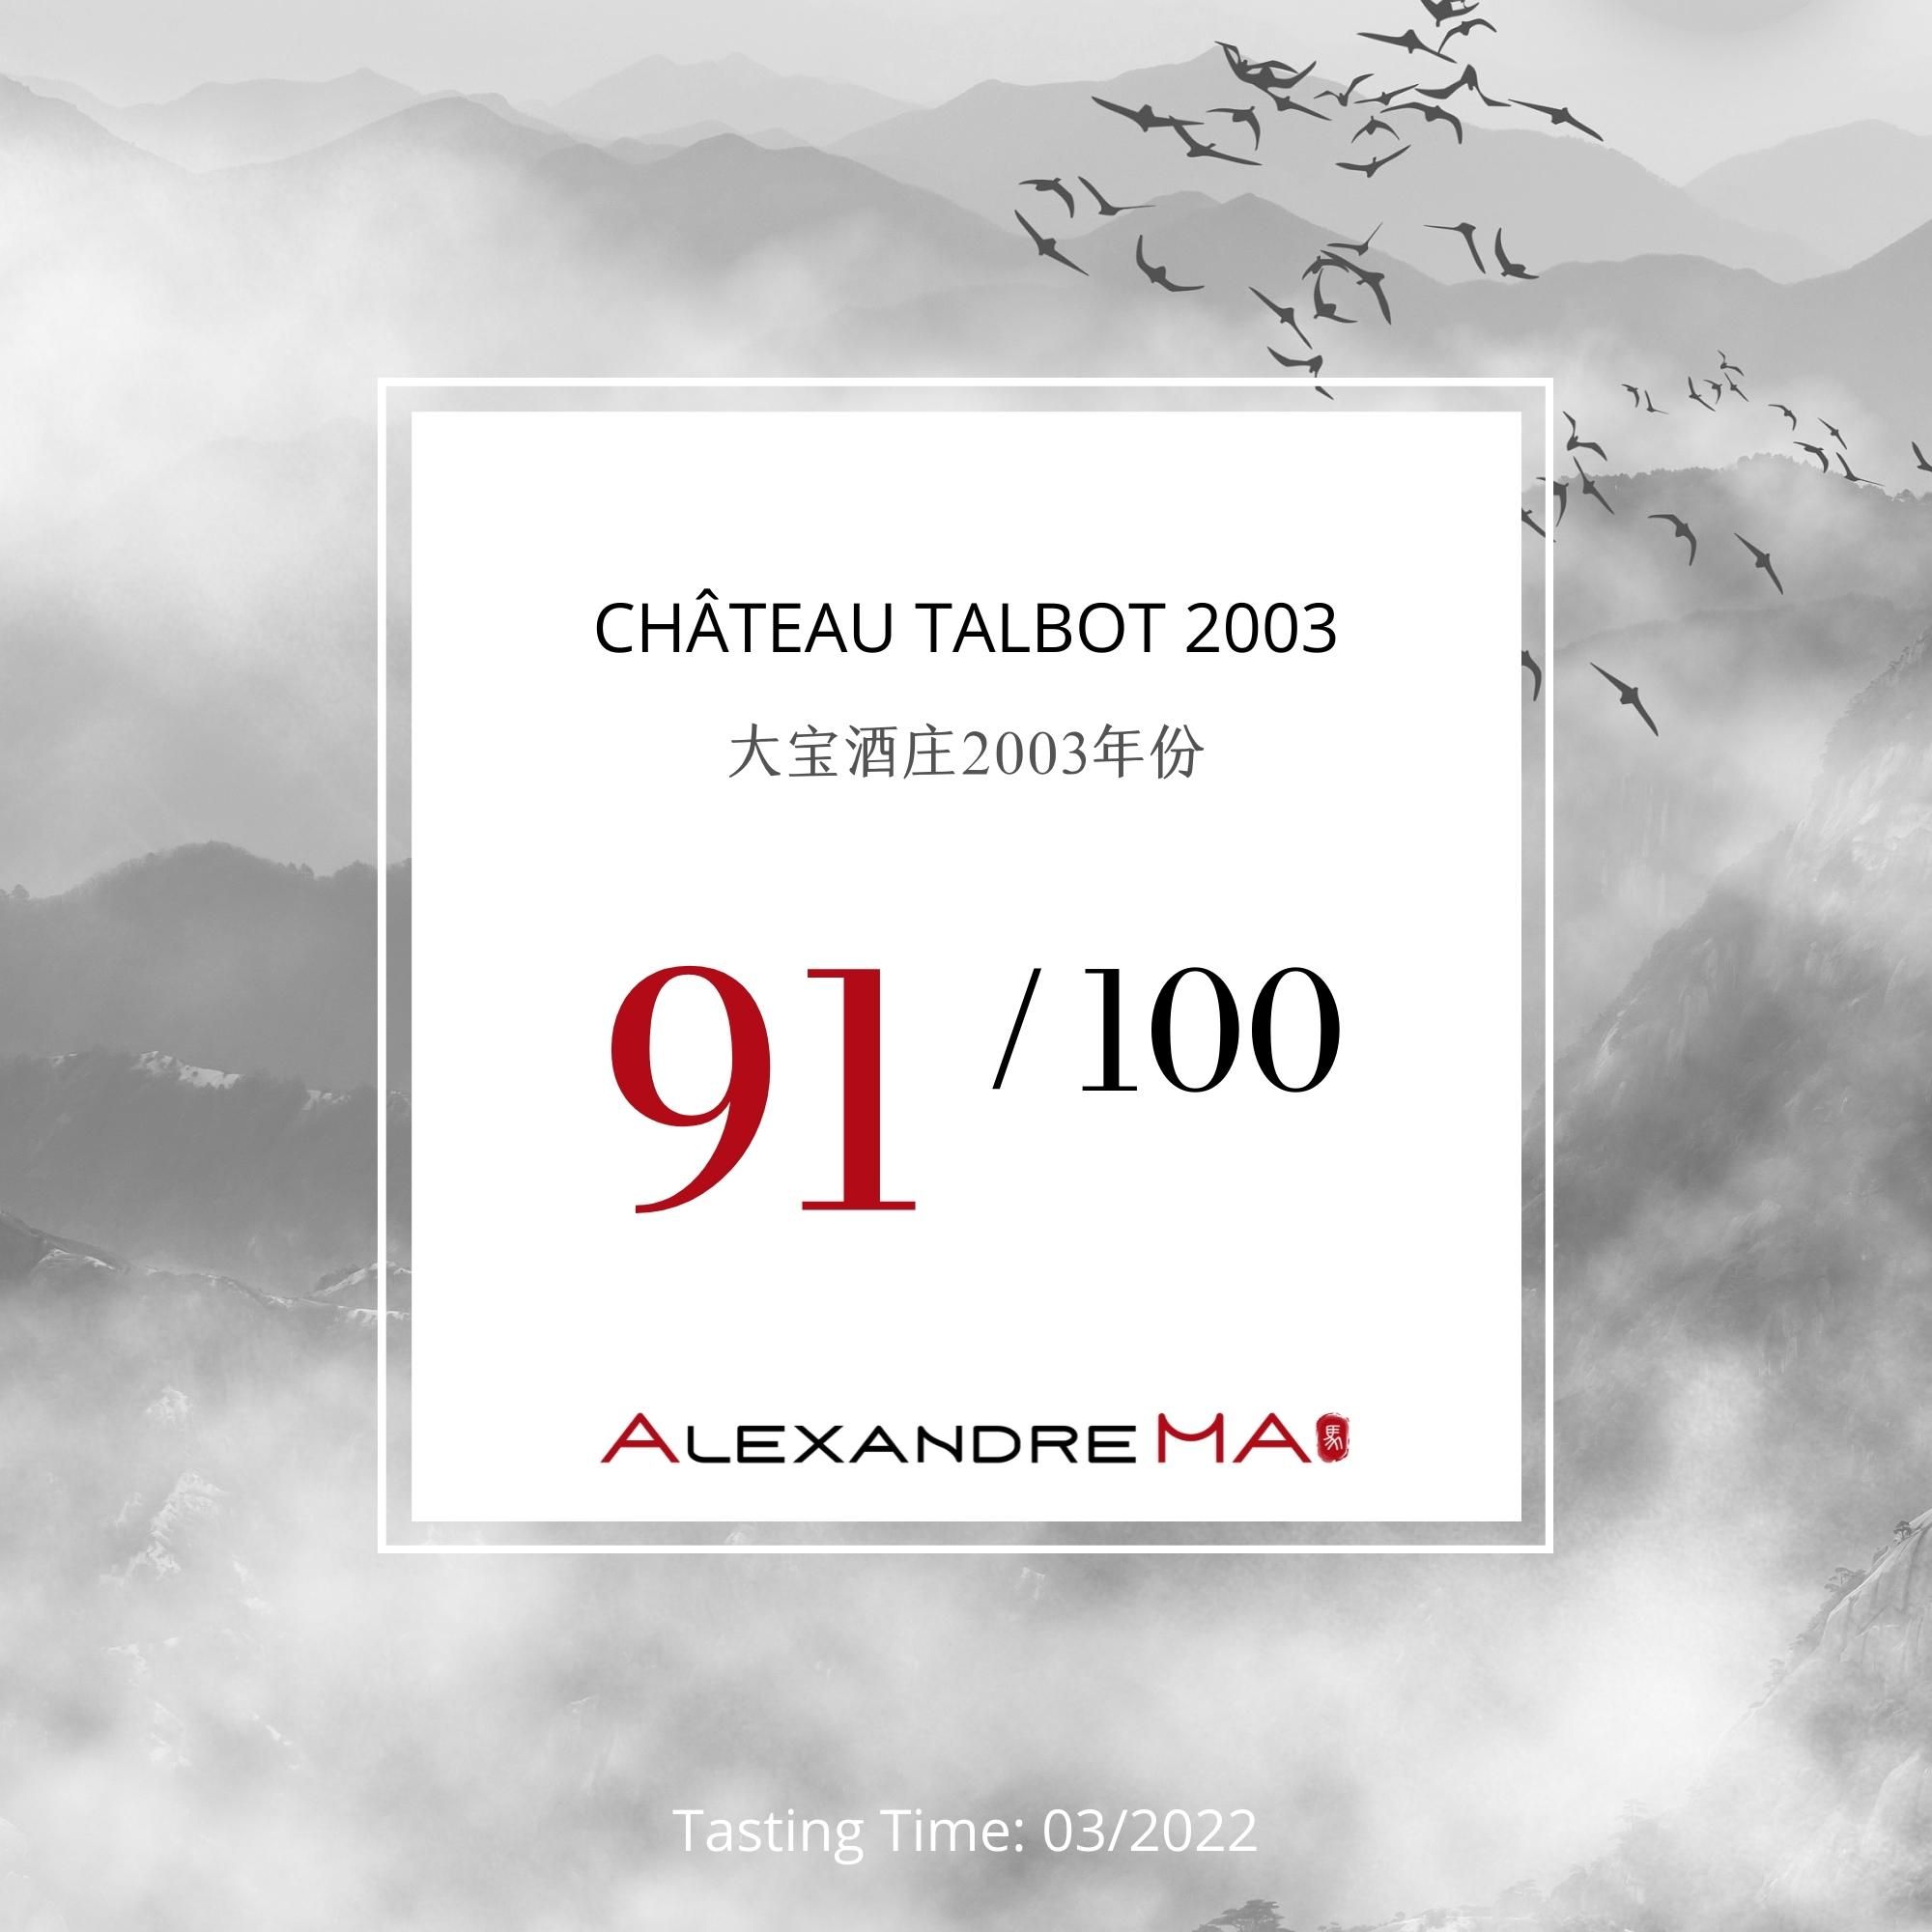 Château Talbot 2003 - Alexandre MA